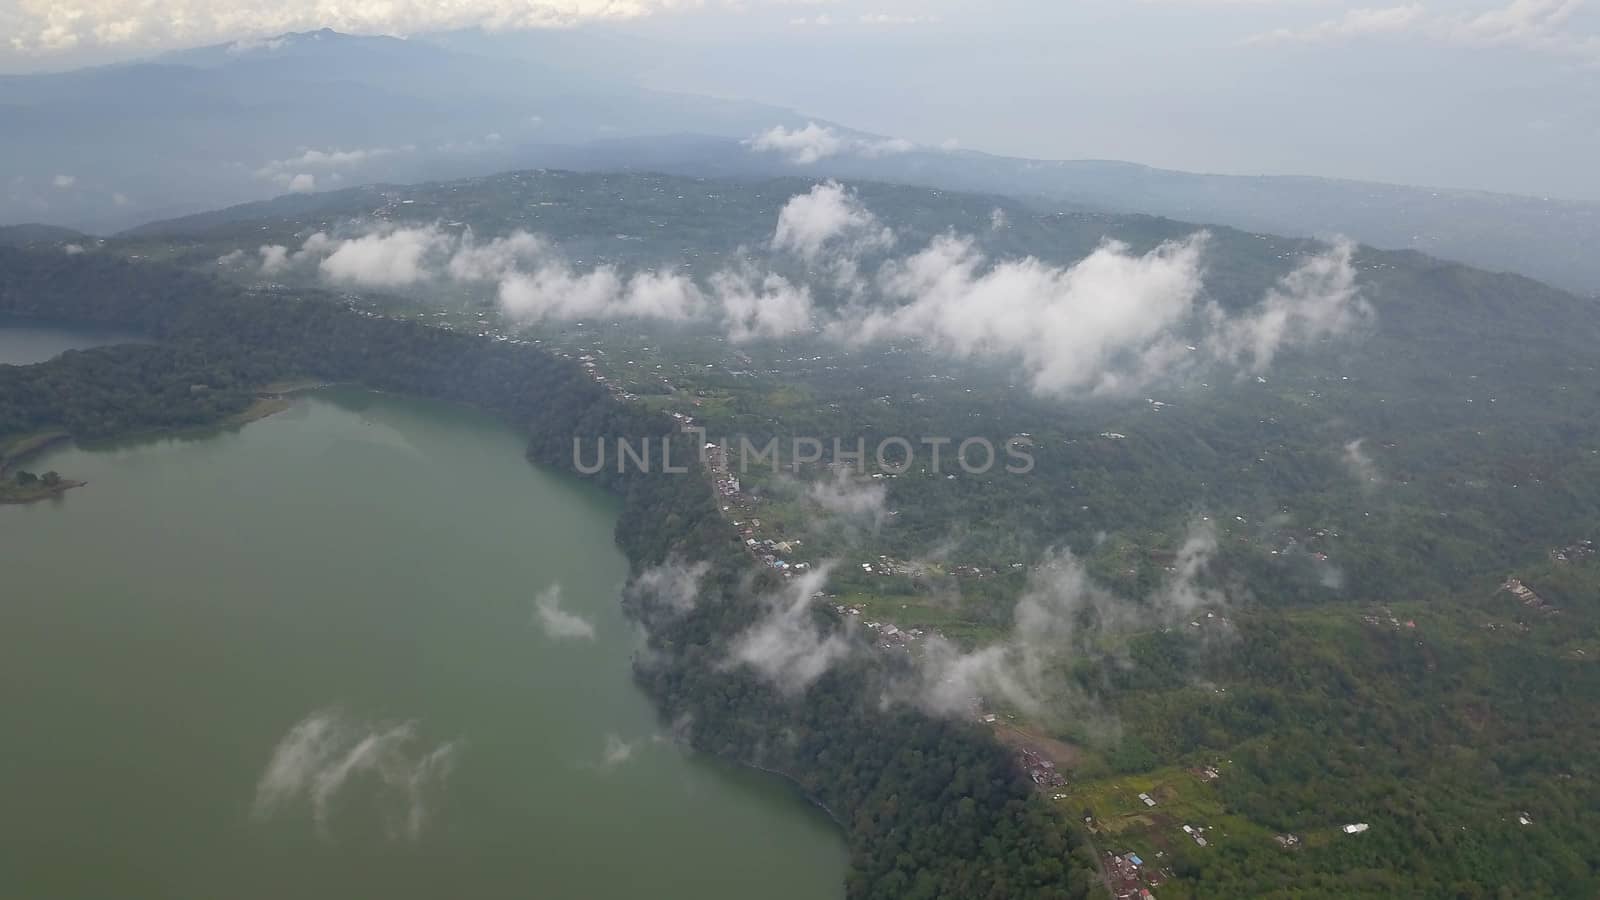 Panoramic aerial view of beautiful twin lakes in an ancient volcanic caldera. Lakes Buyan and Tamblingan, Bali, Indonesia.